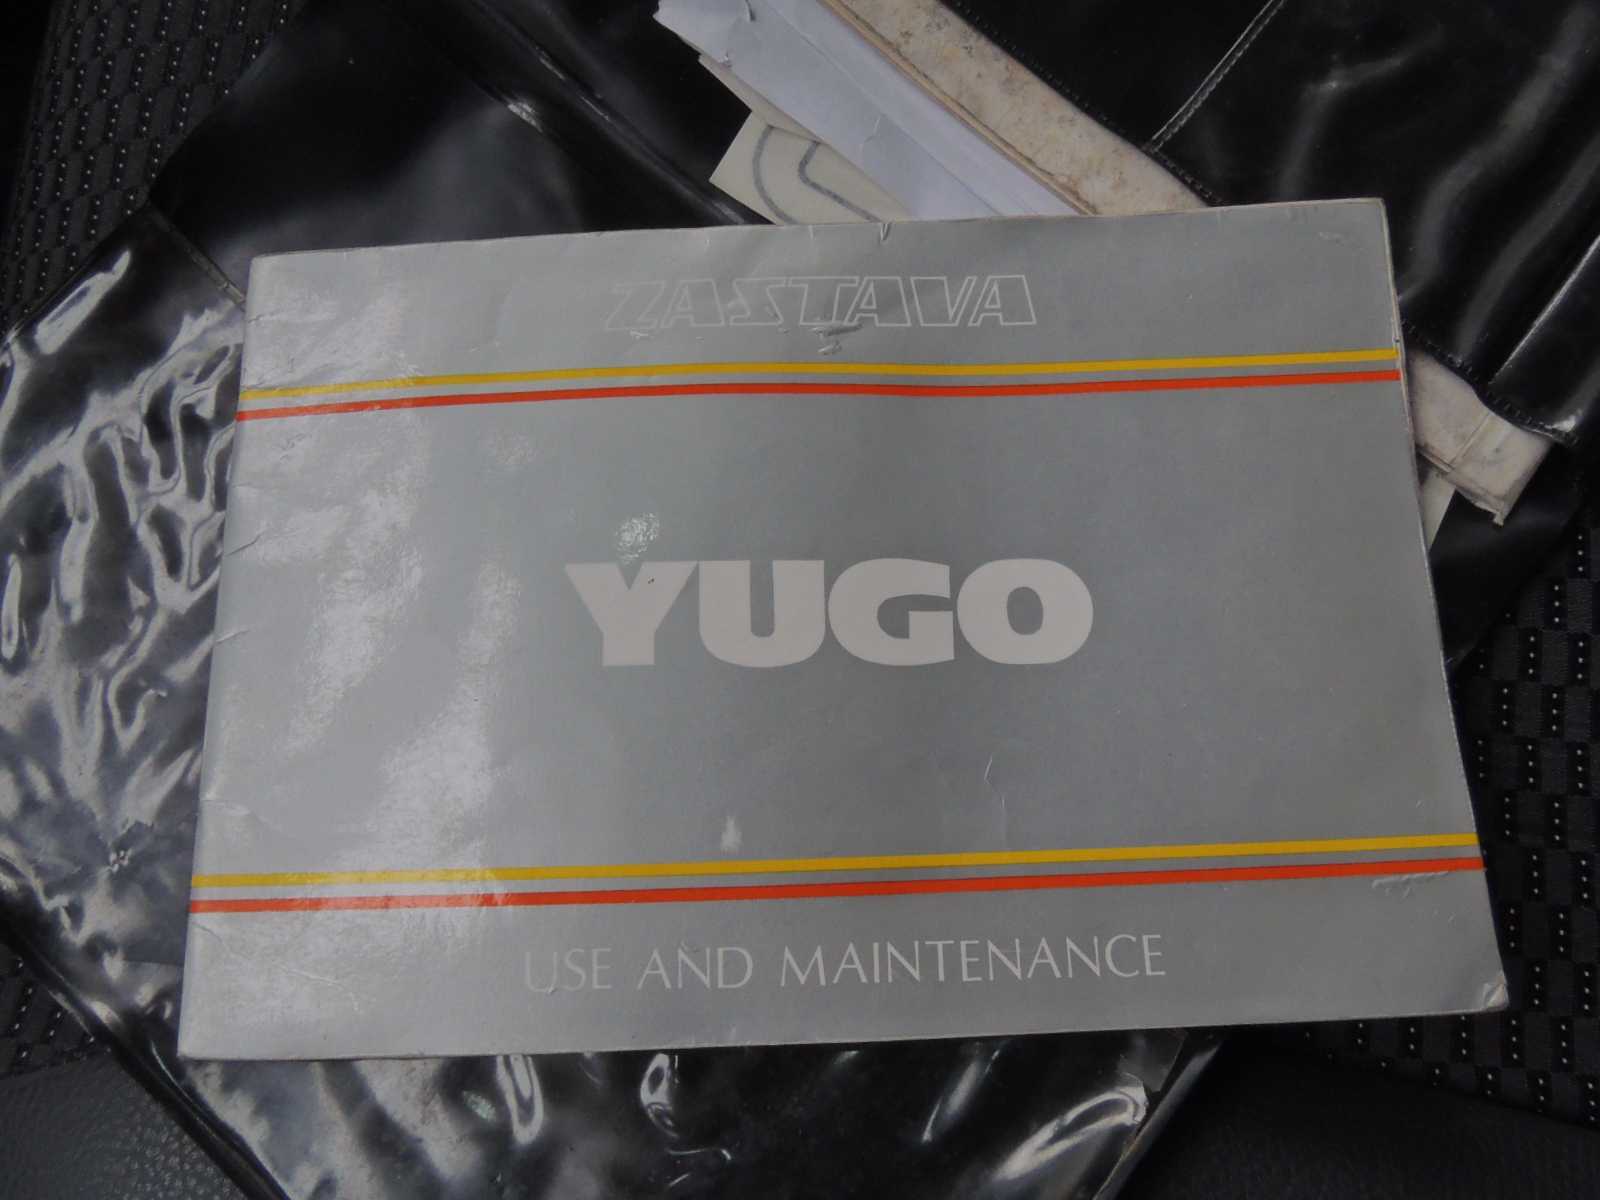 yugo-55a-1989-clasicos-rutamotor-19